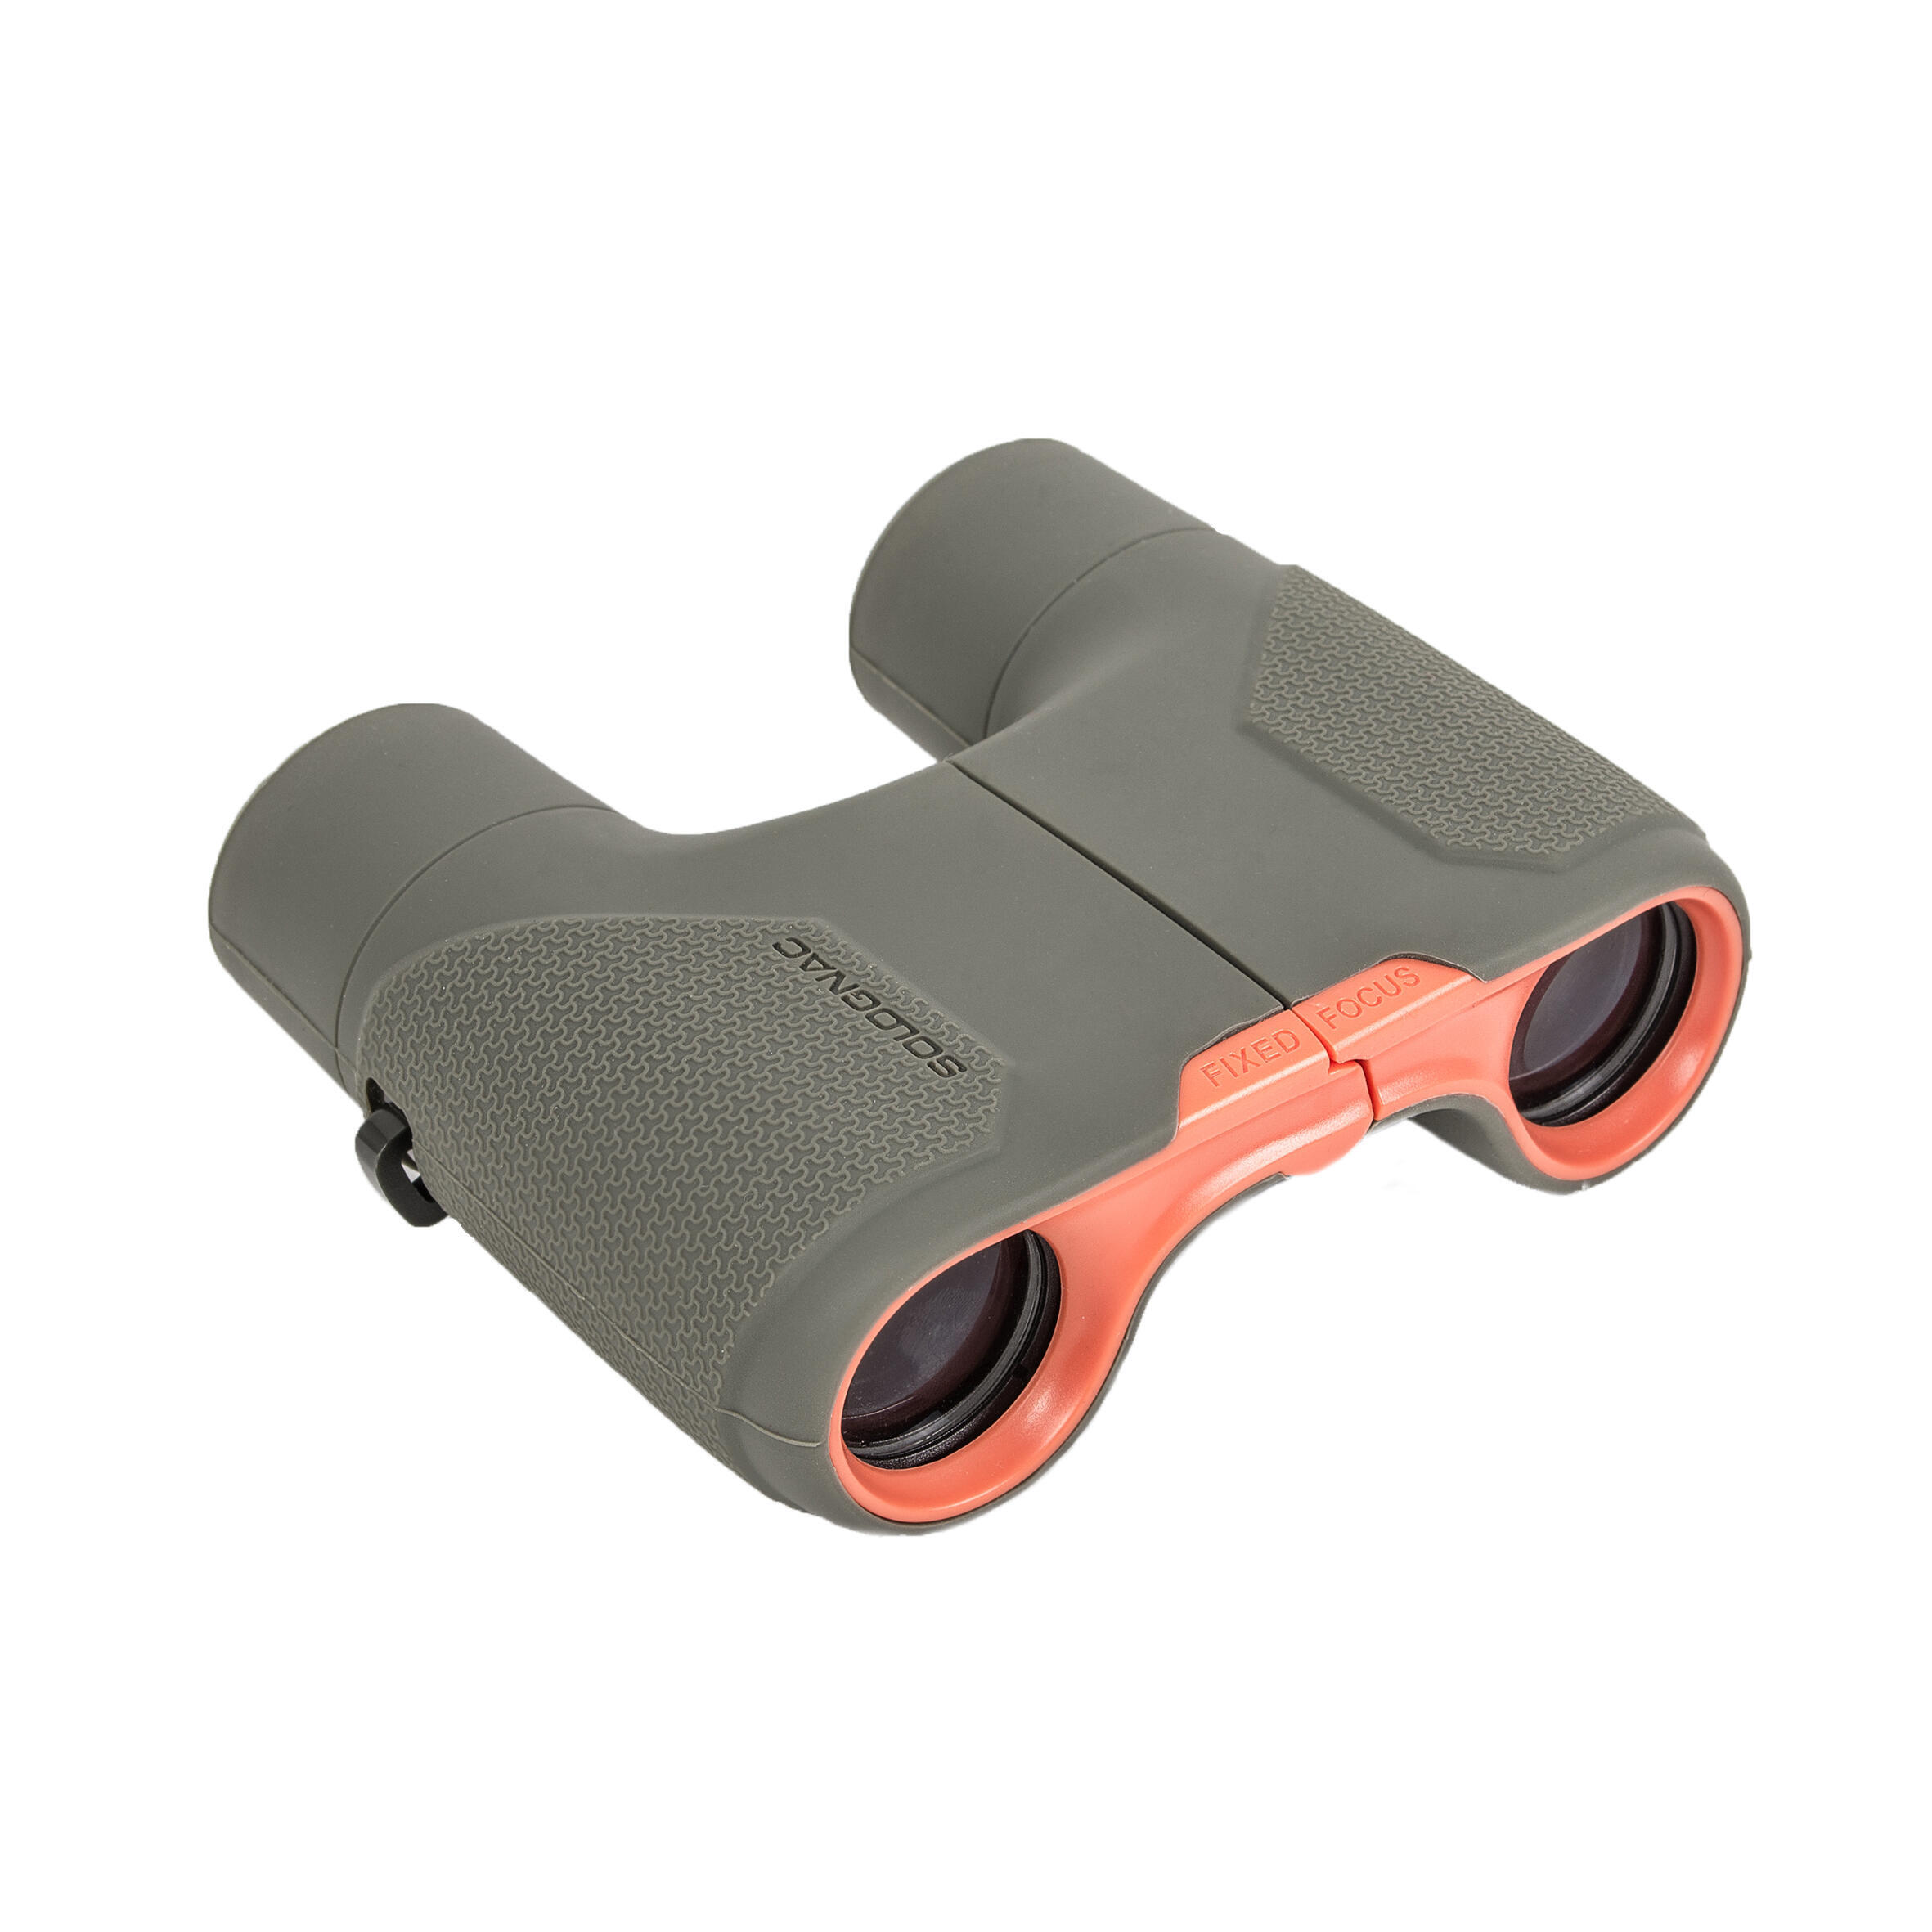 SOLOGNAC Lightweight Focus-Free Binoculars 8x25